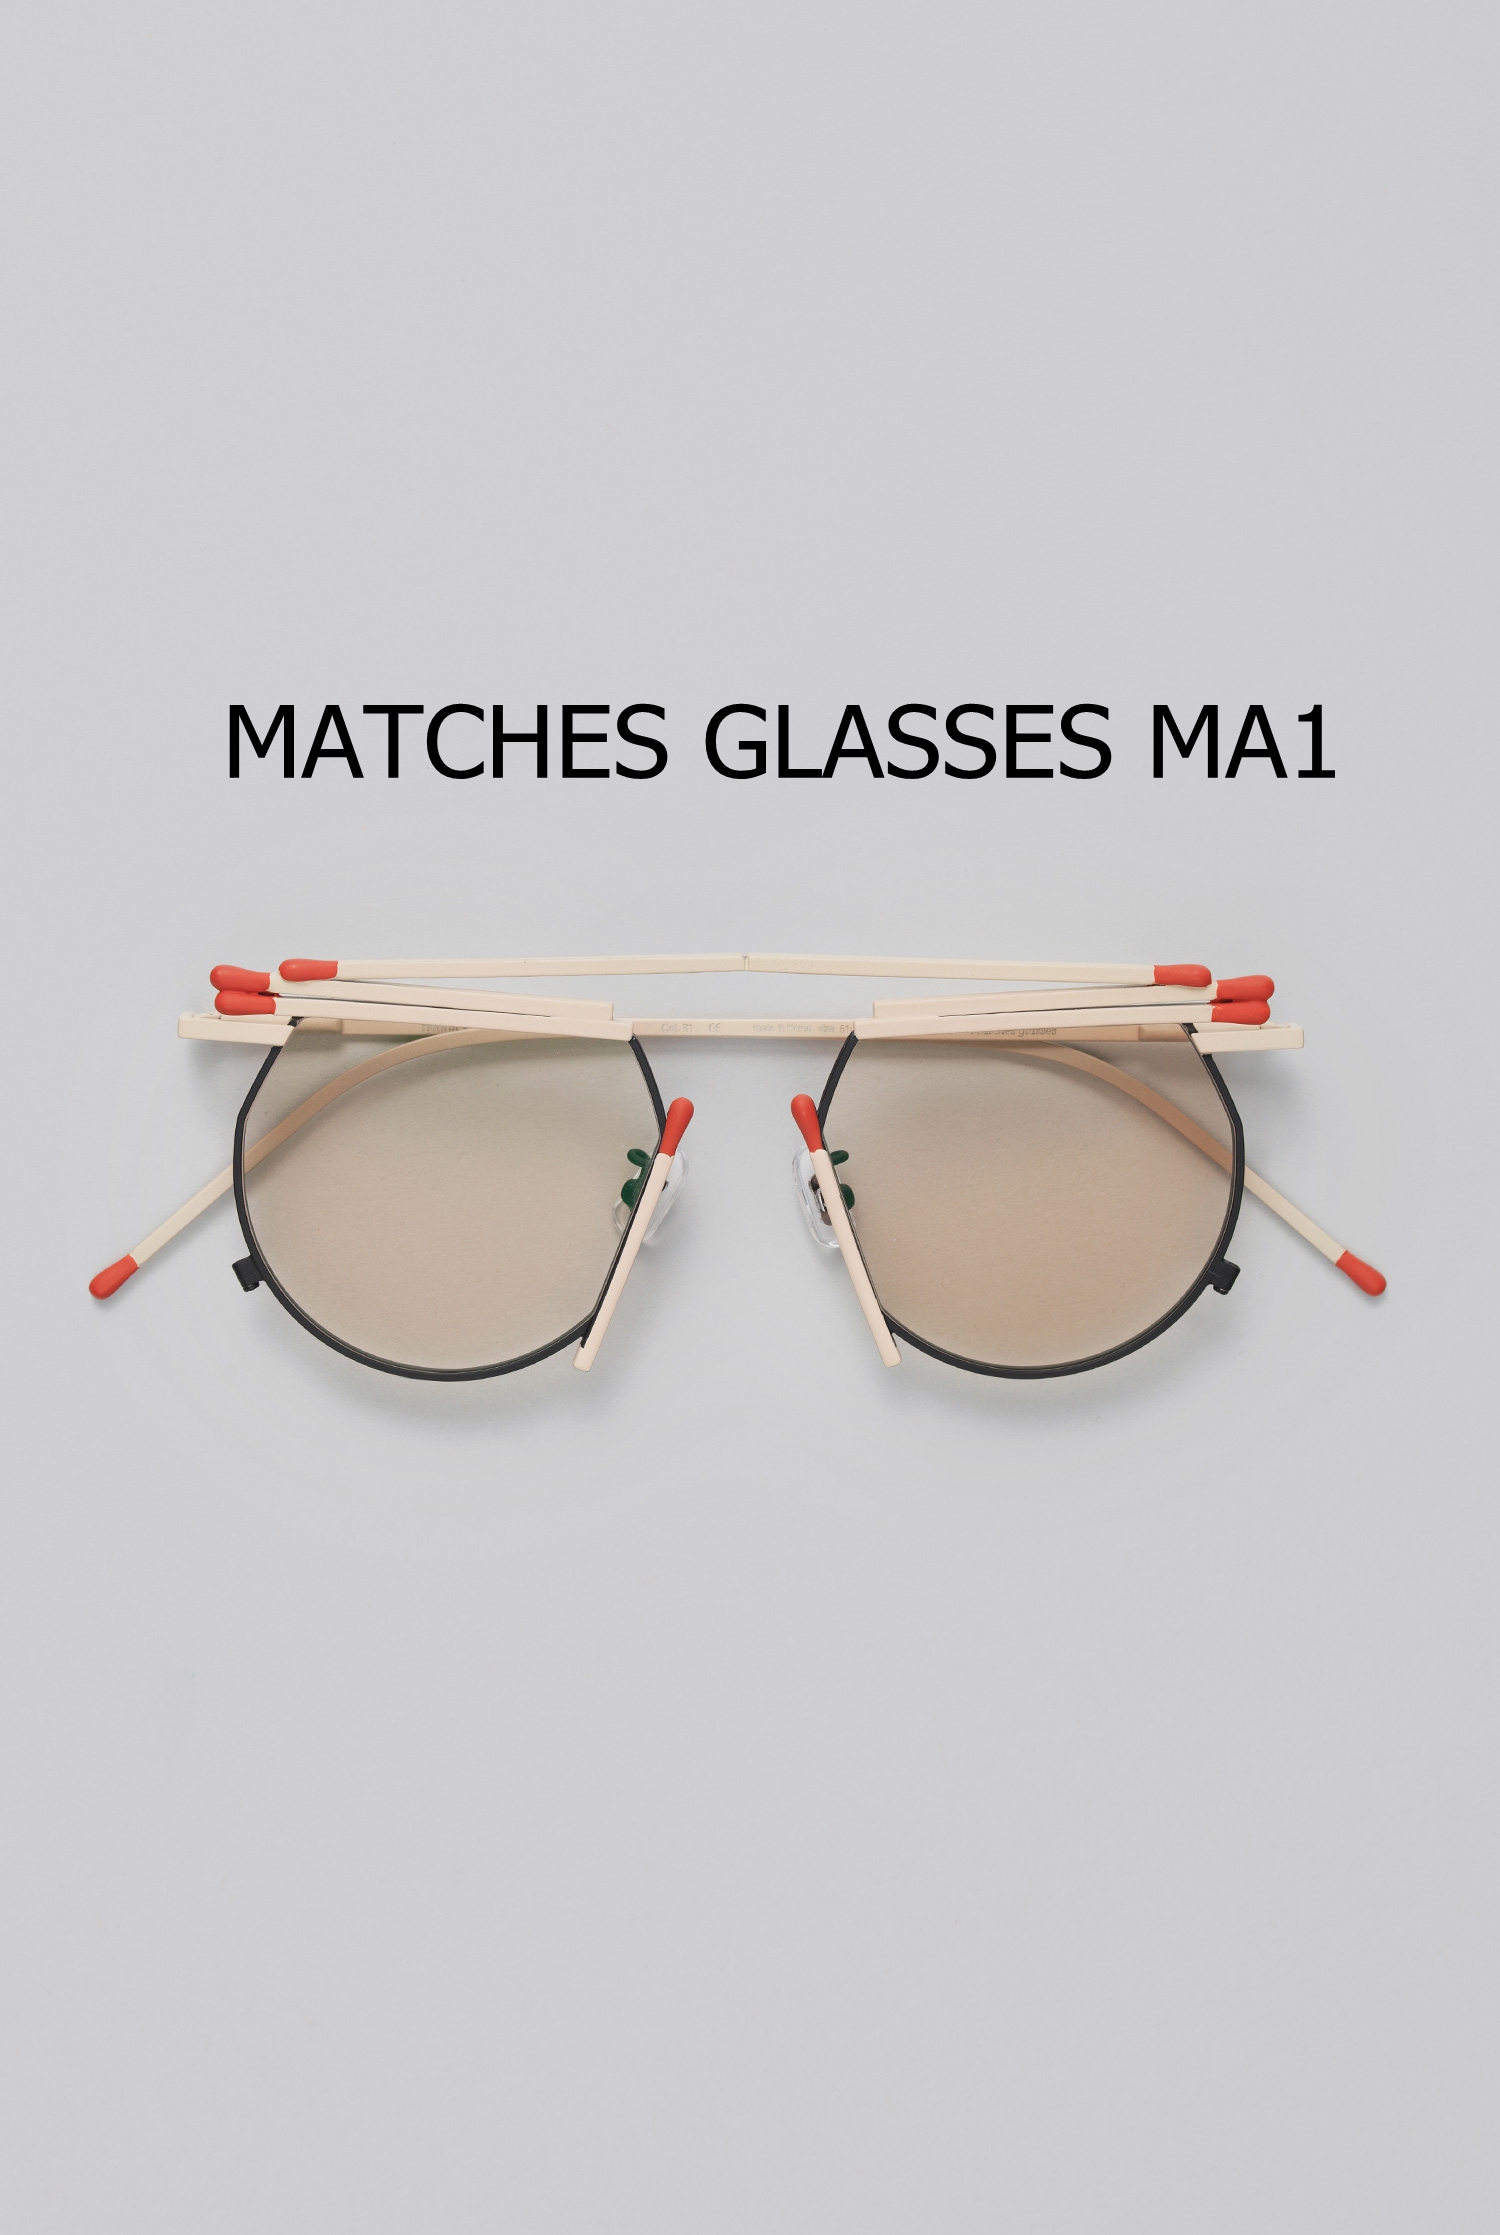 MATCHES GLASSES MA1 